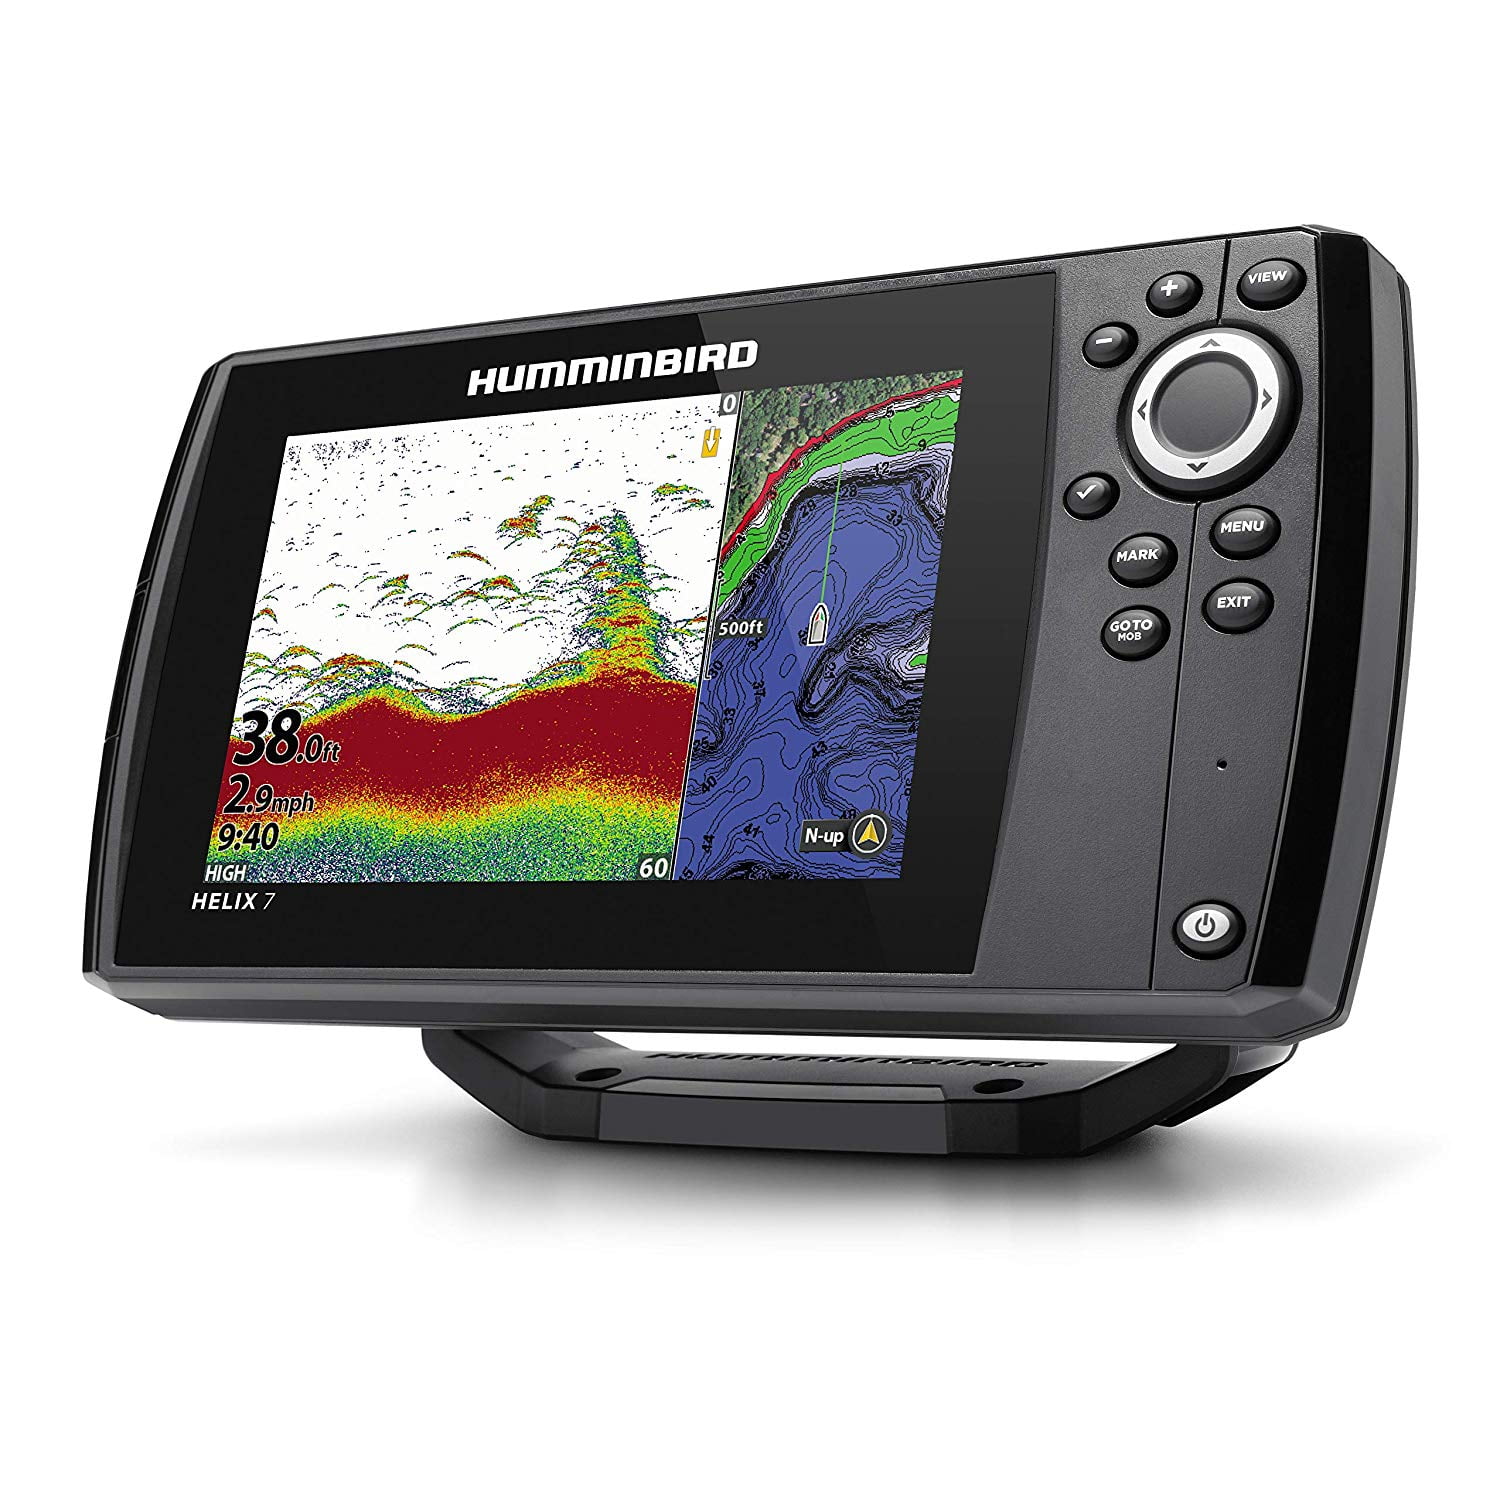 Humminbird Echolot GPS Plotter Portabel Master Edition Helix 7 Chirp GPS G3 